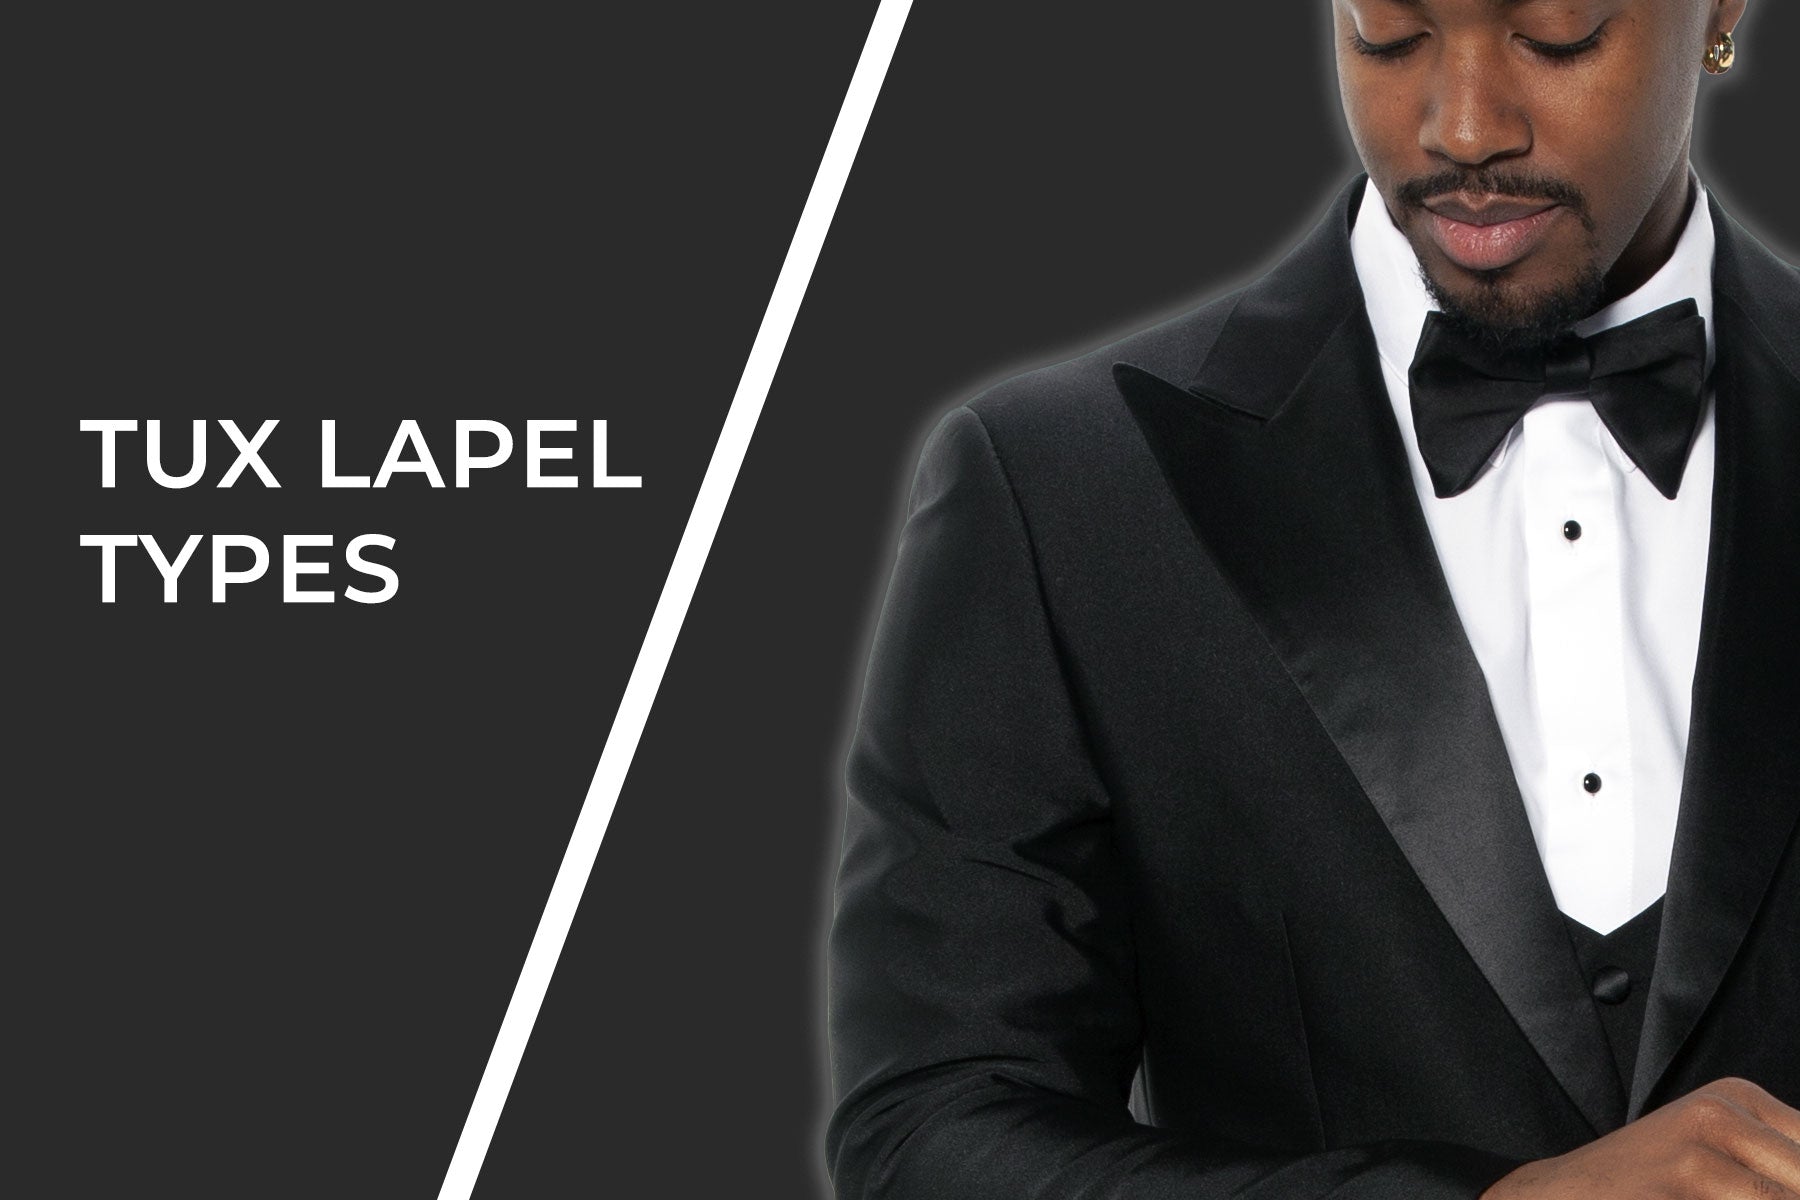 tuxedo and suit lapel types